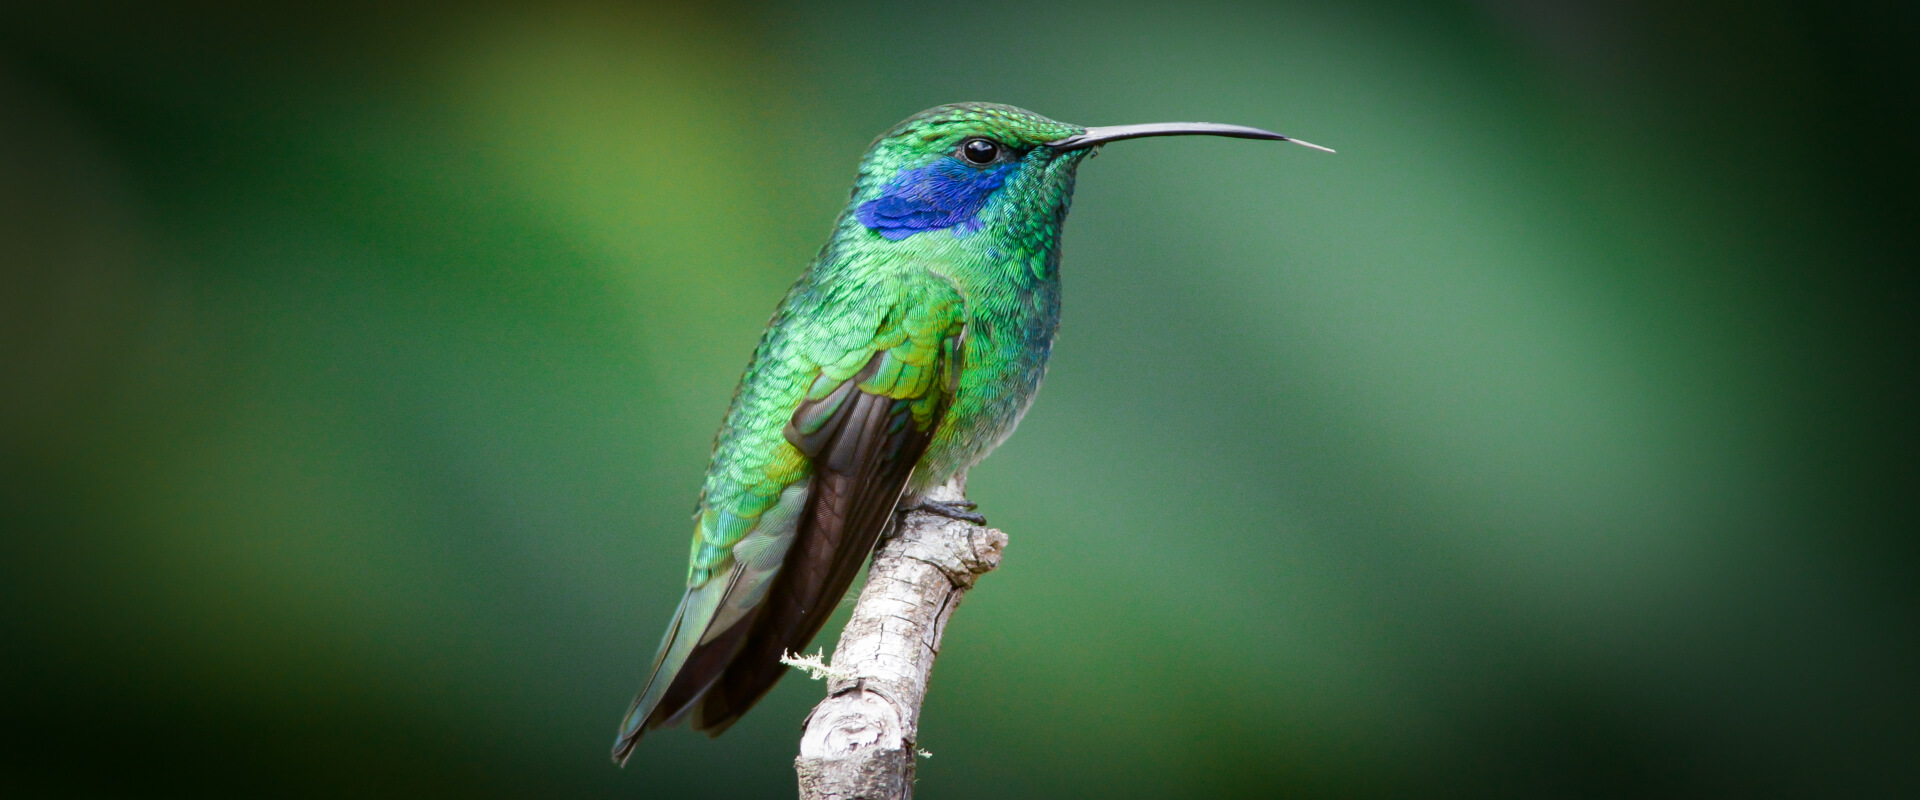 Curi Cancha Birdwatching Private Tour | Costa Rica Jade Tours